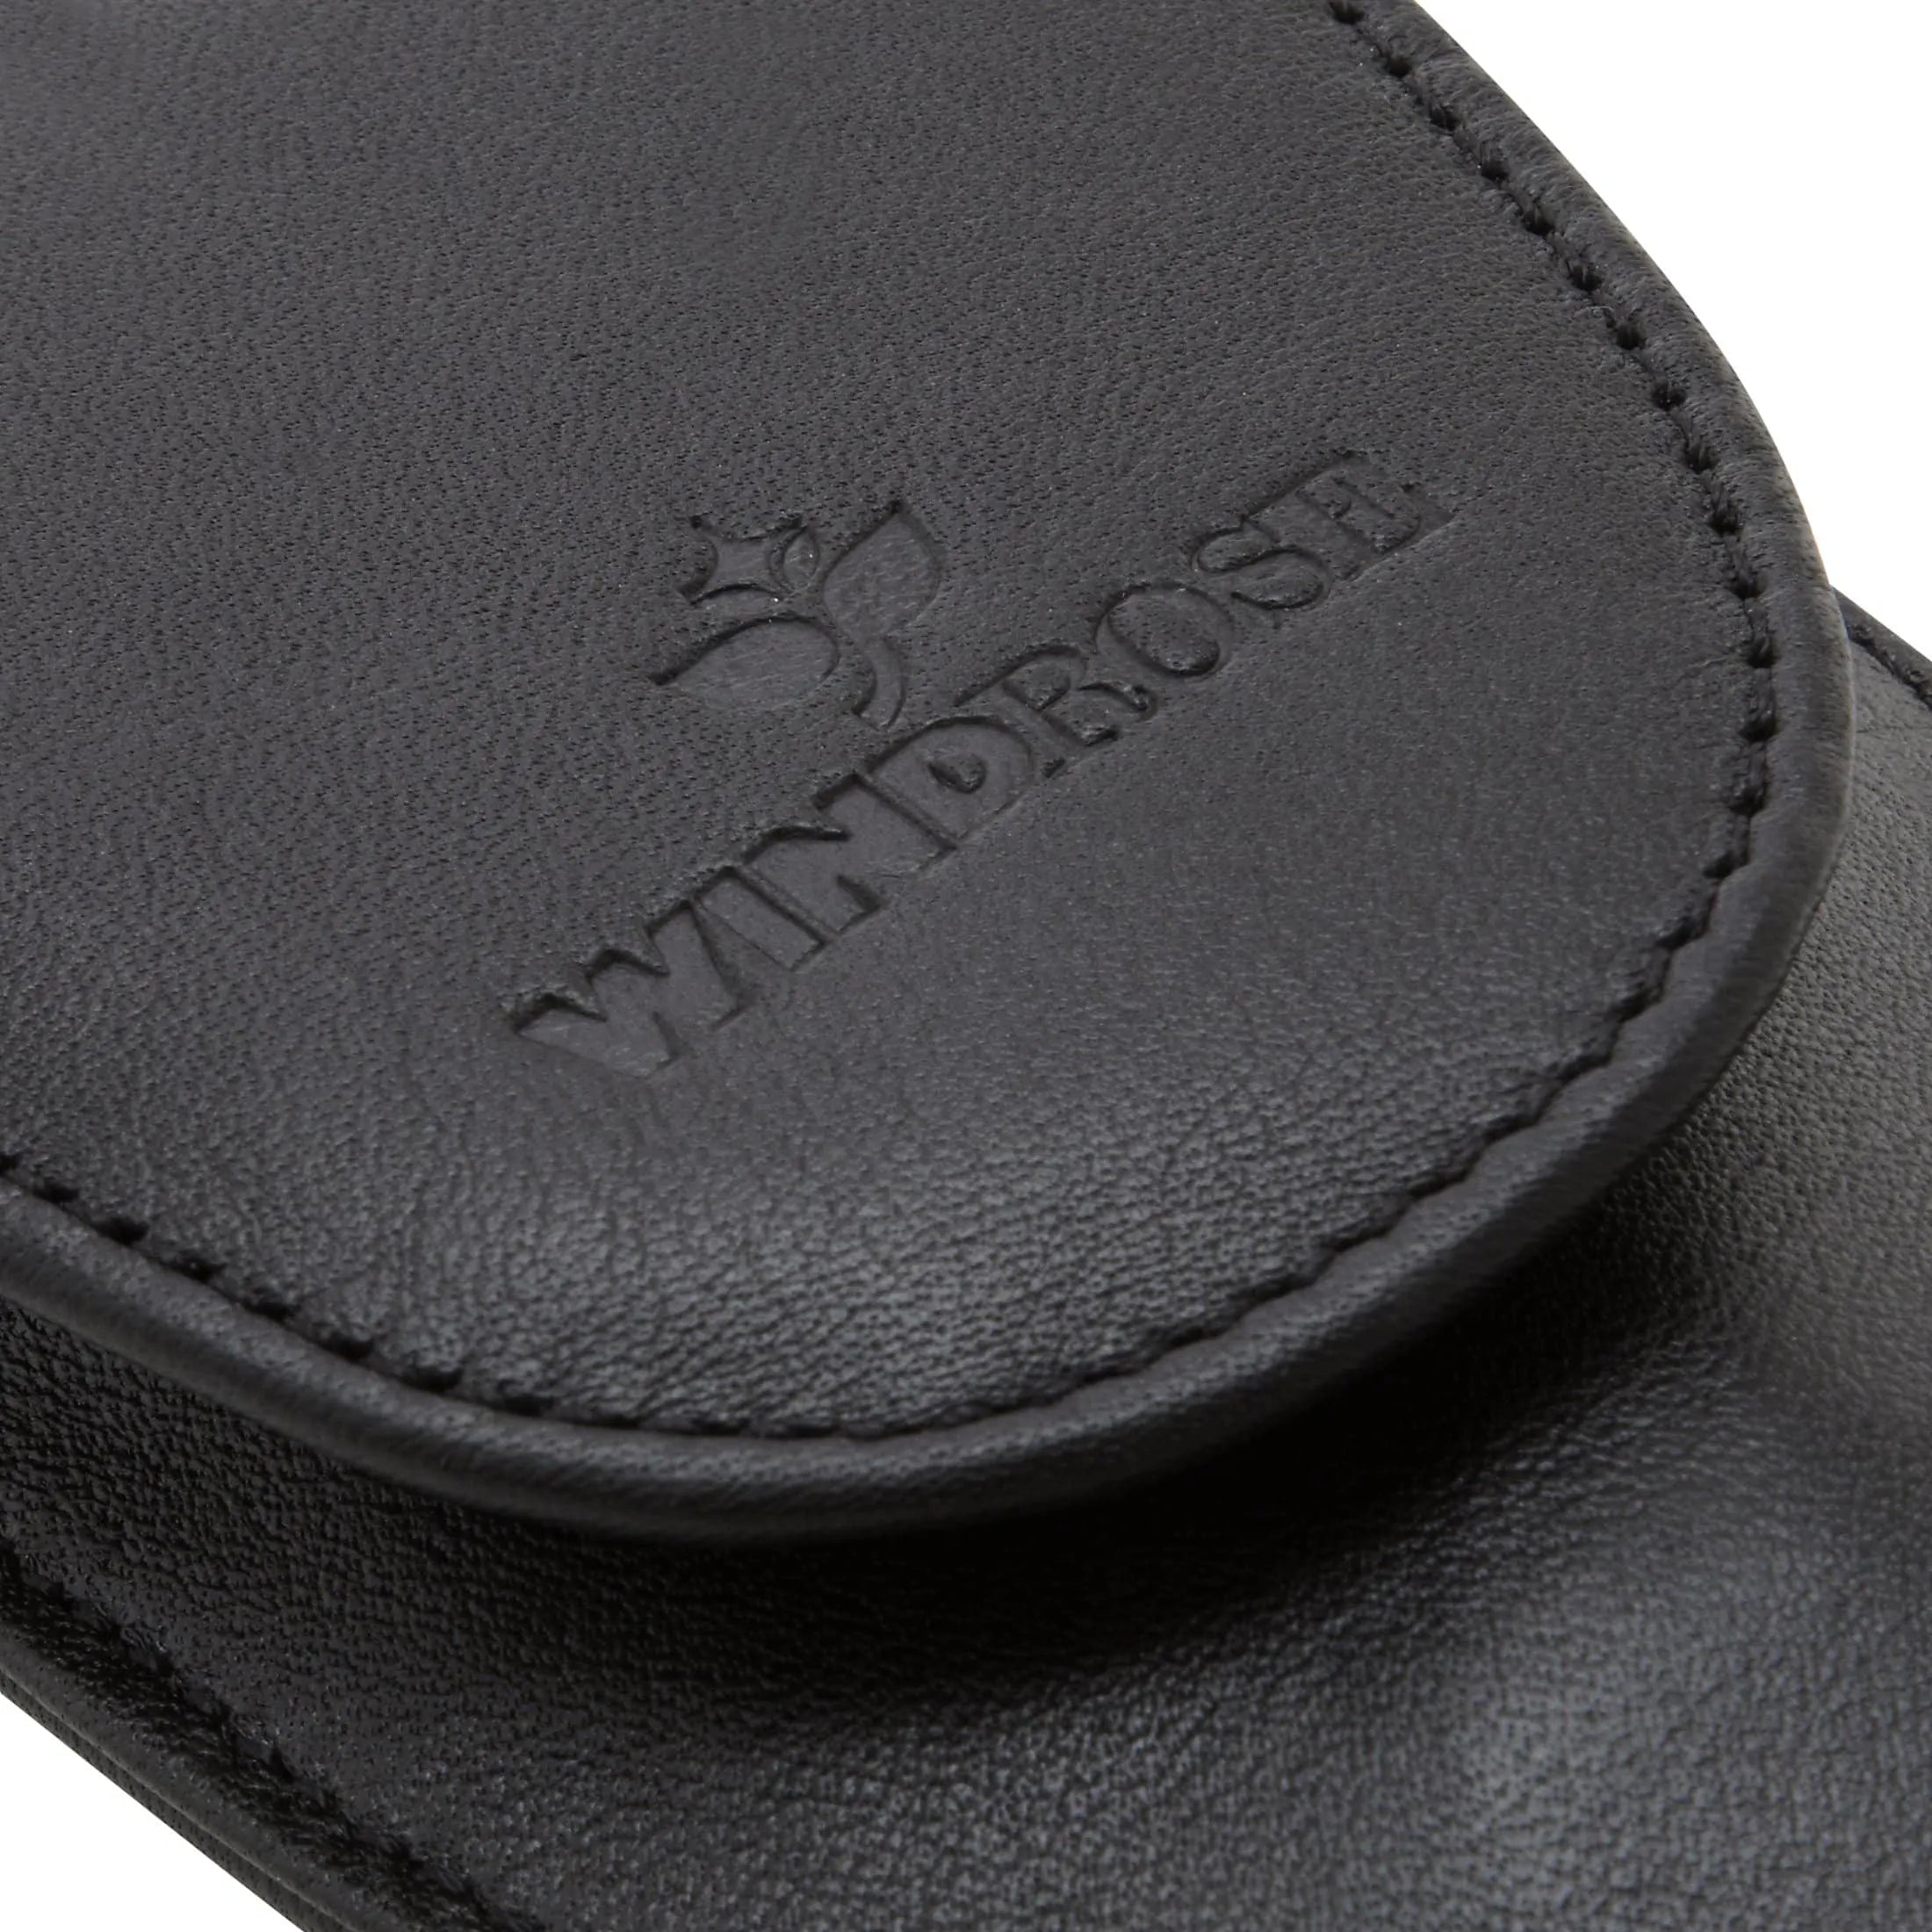 Manucure de poche Windrose Nappa 10 cm - noir